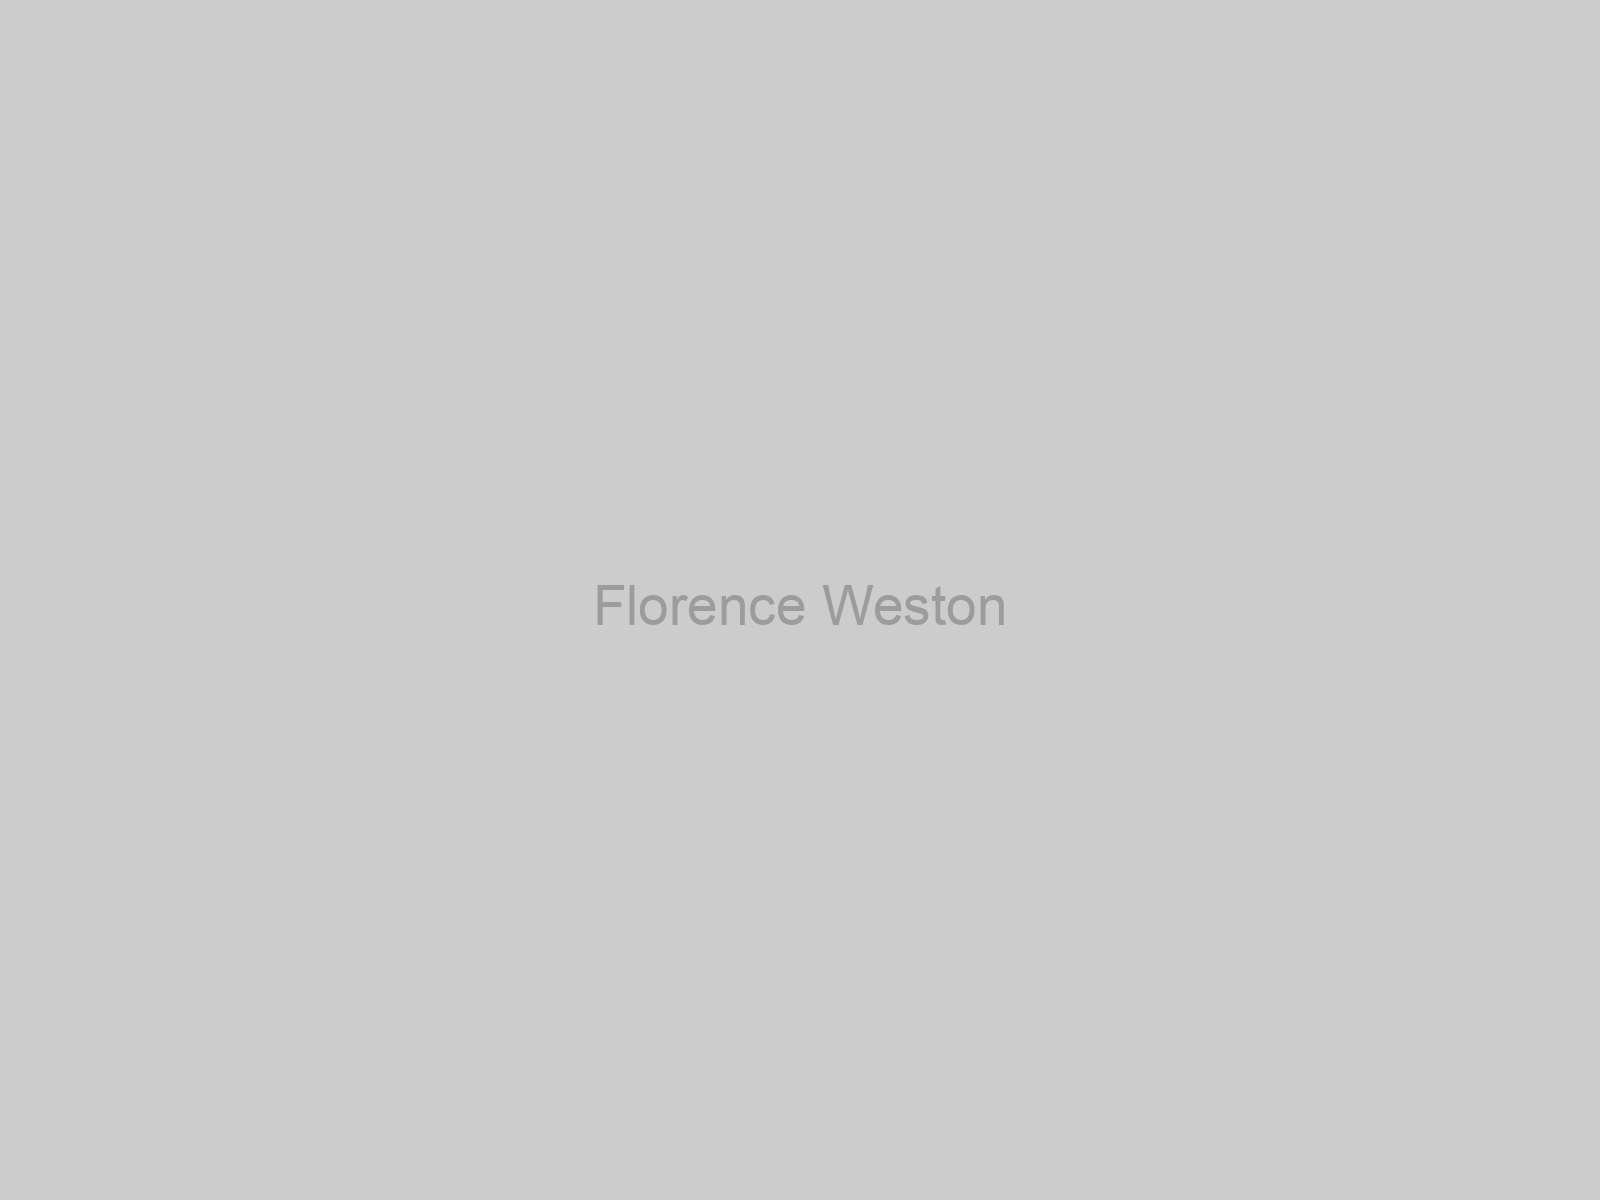 Florence Weston